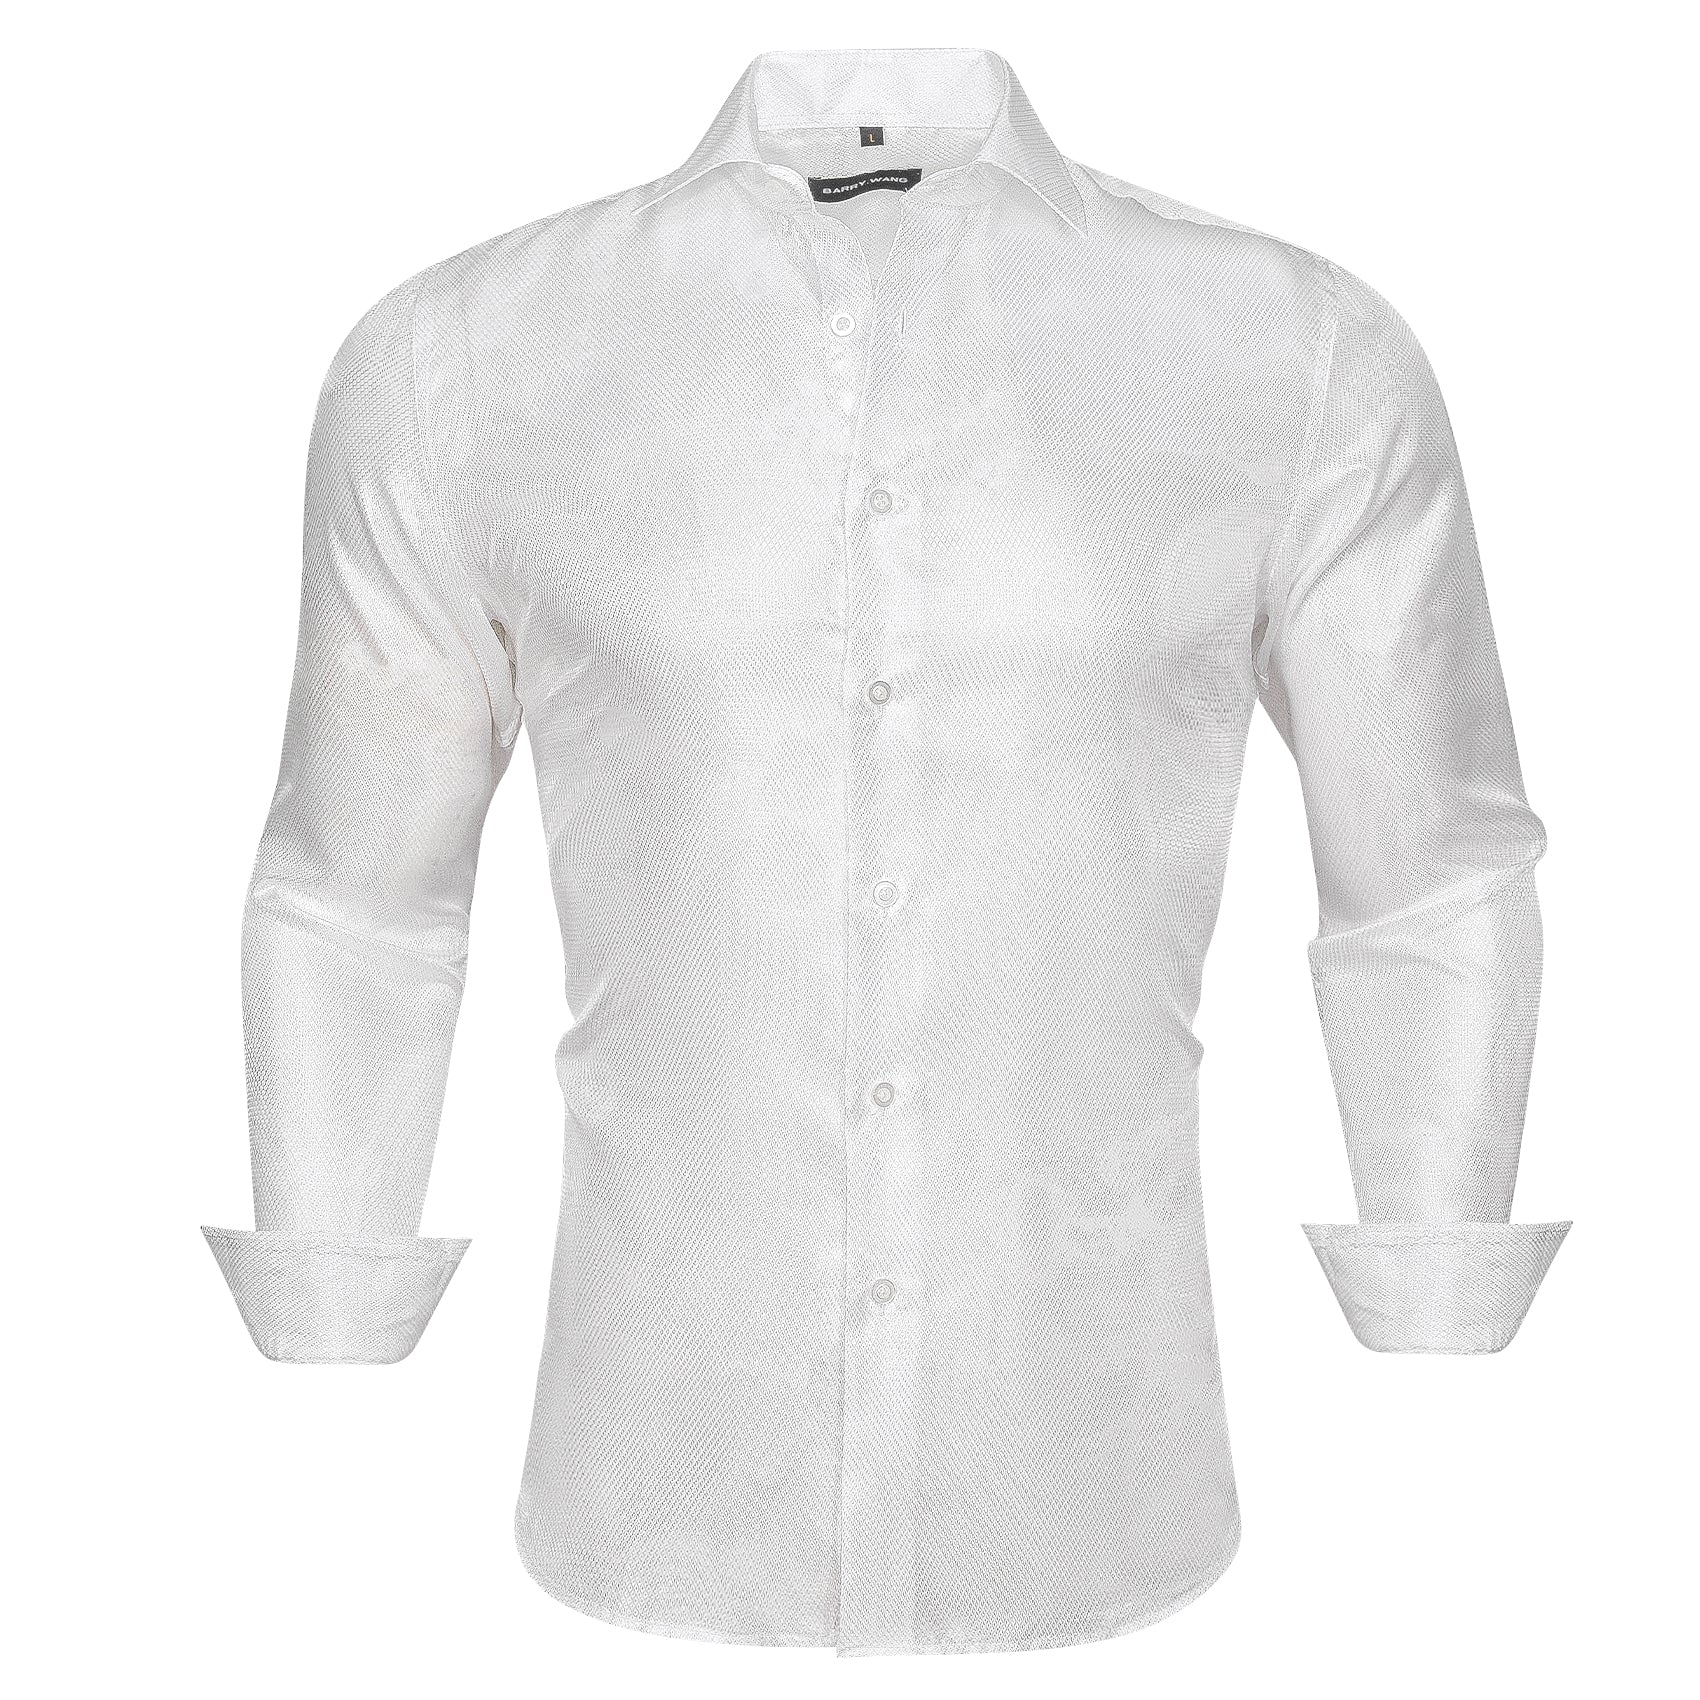 Barry.wang Luxury White Solid Silk Shirt